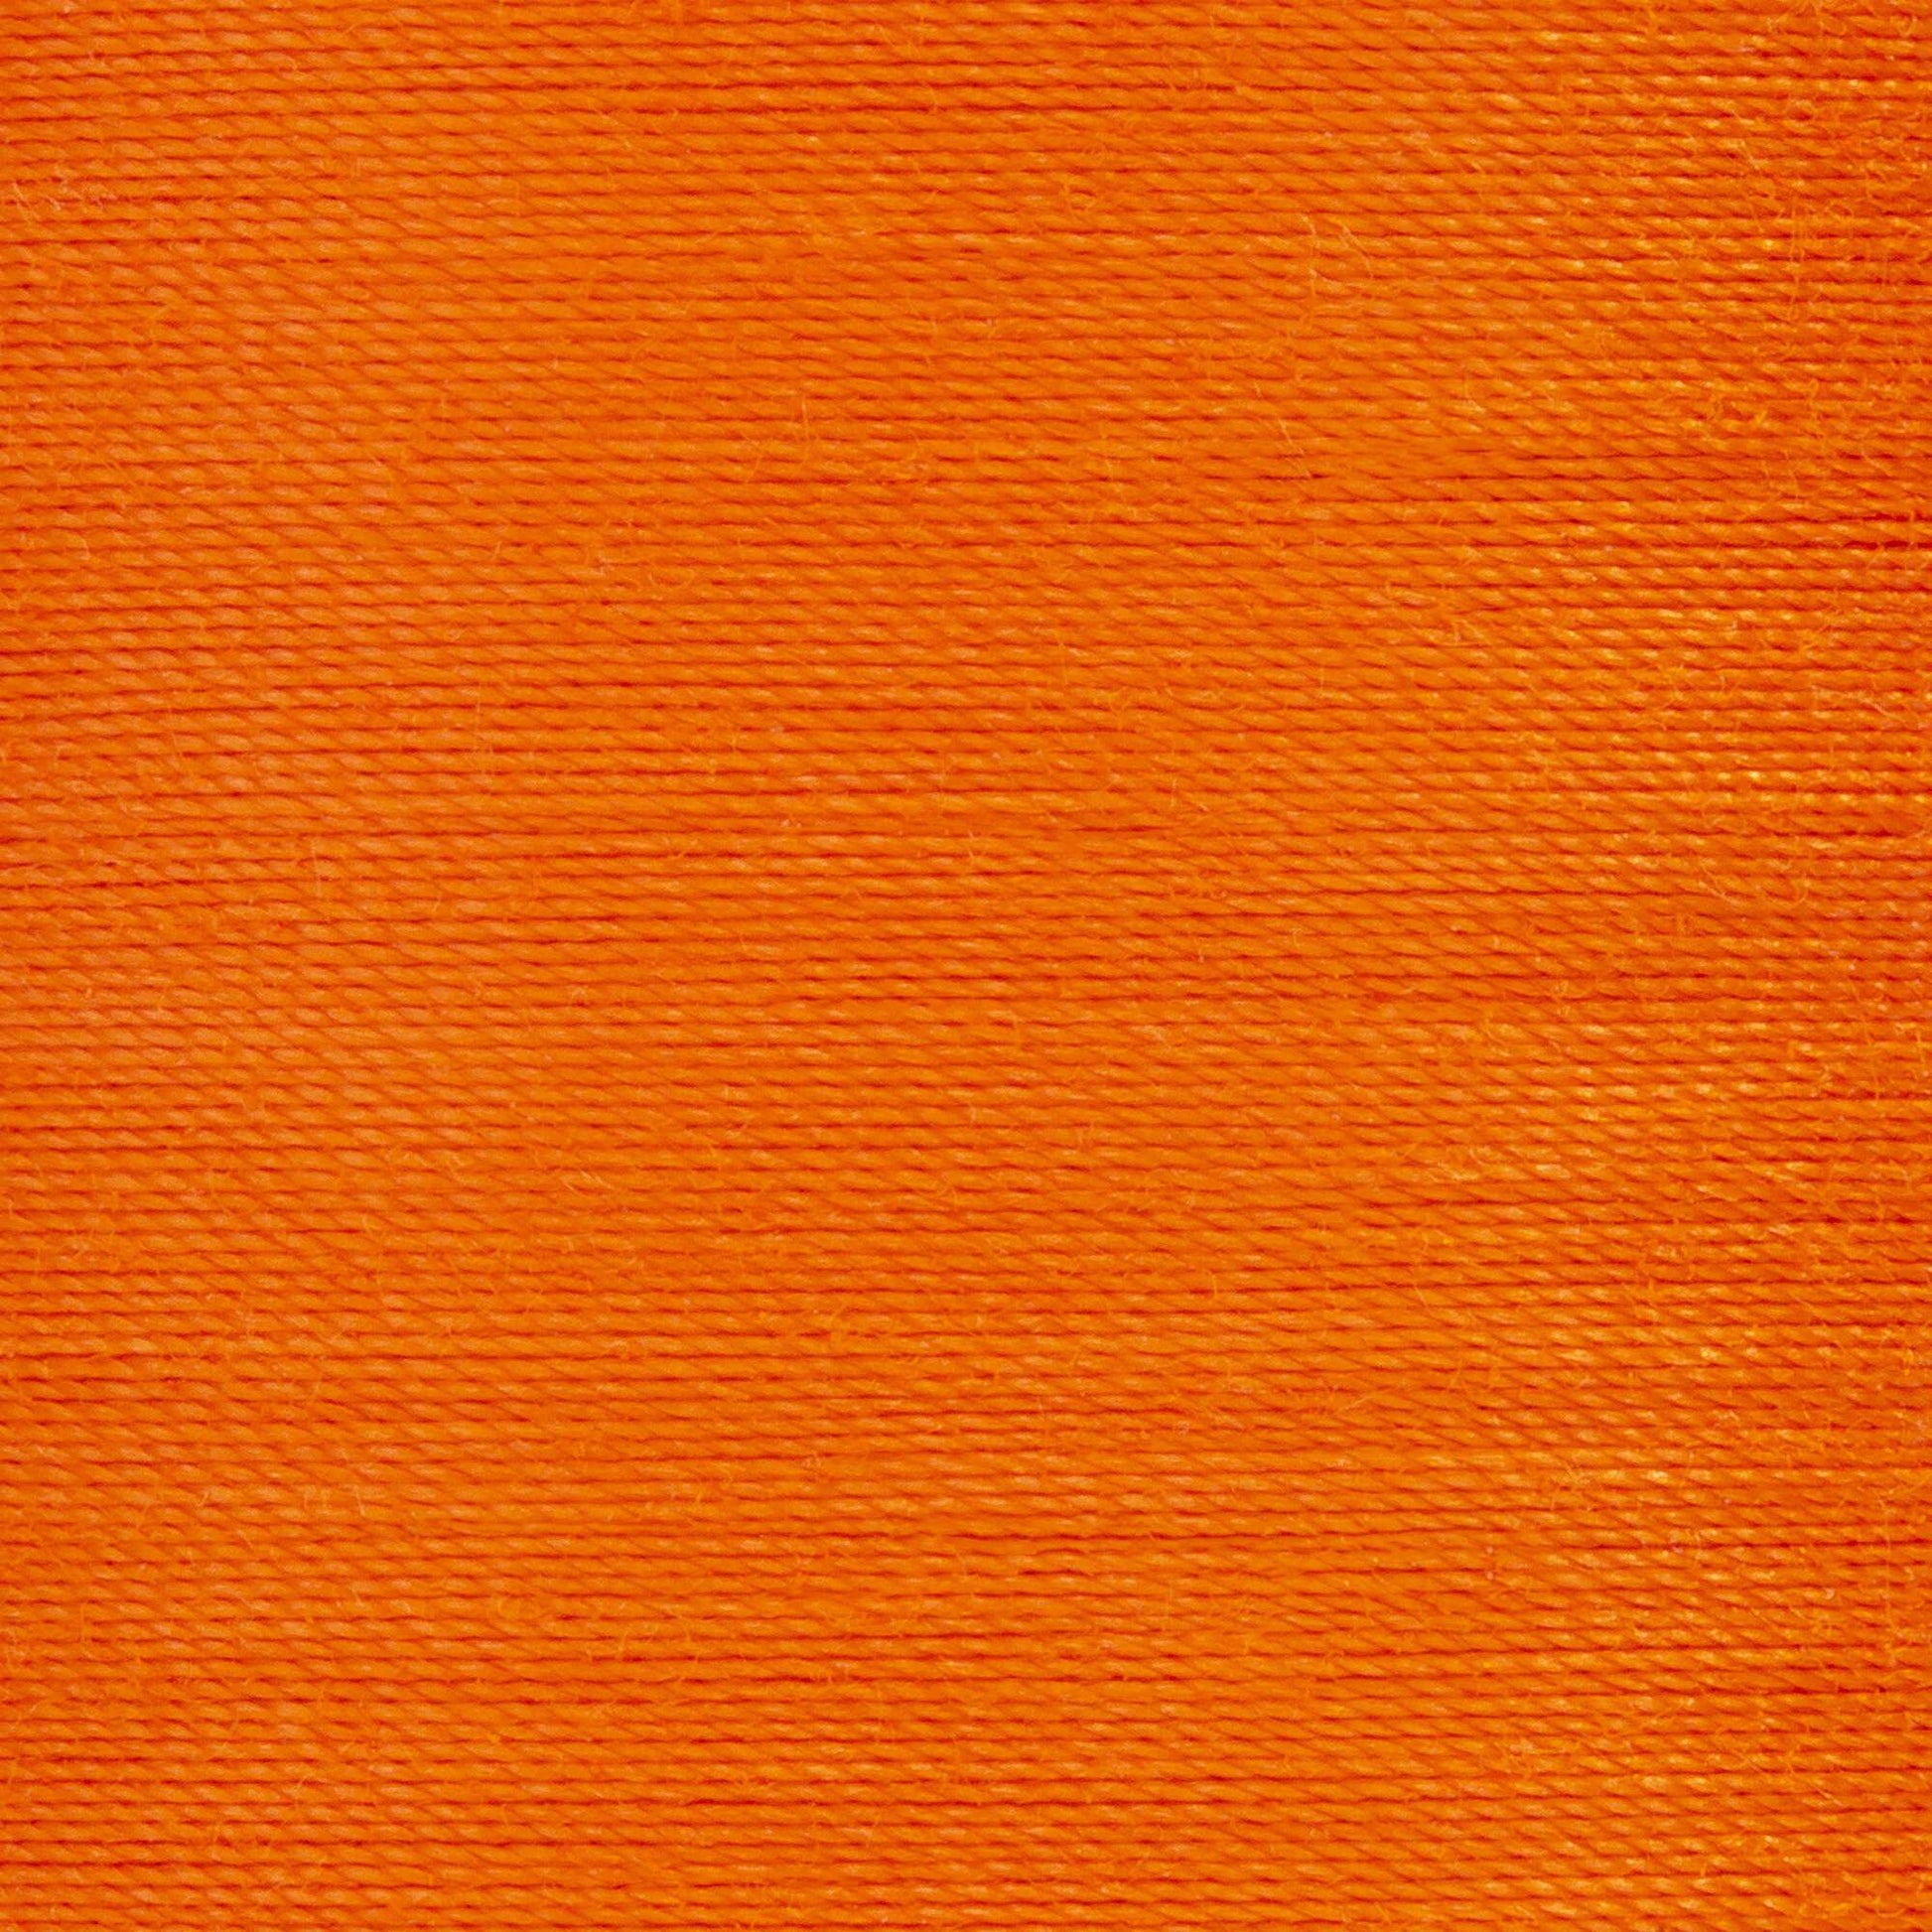 Coats & Clark All Purpose Thread (500 Yards) Orange